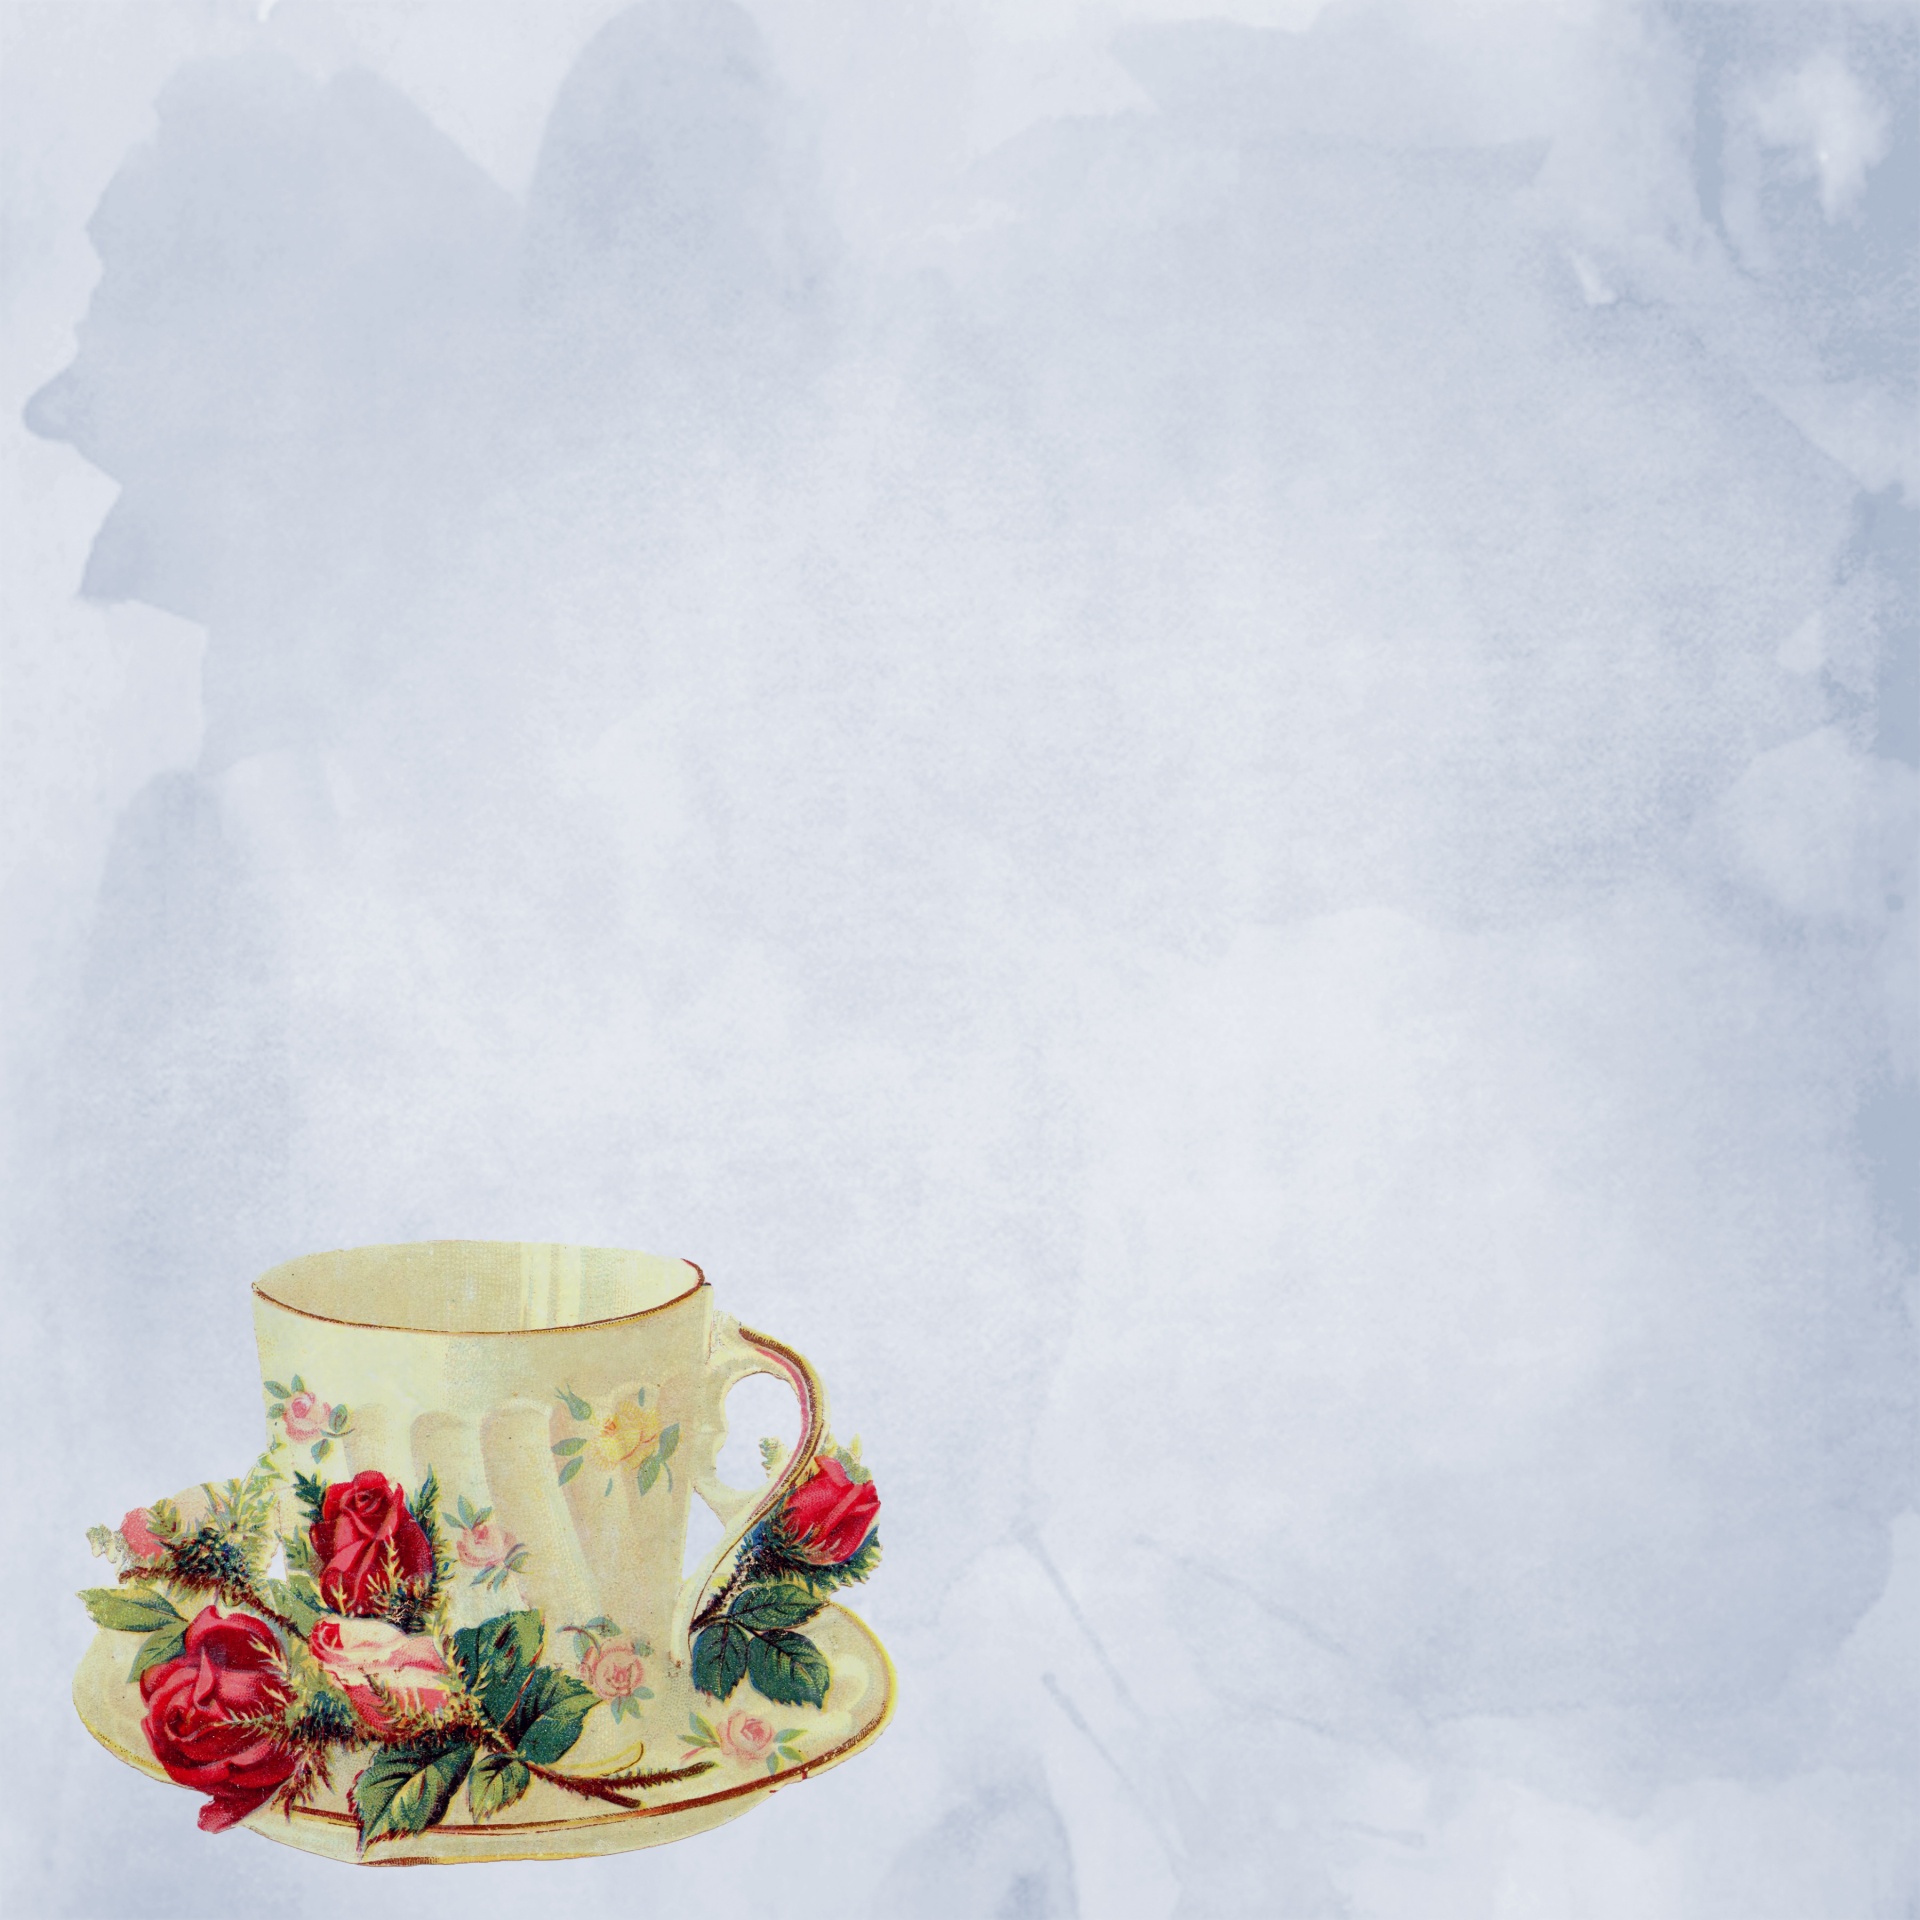 Vintage Teacup With Roses